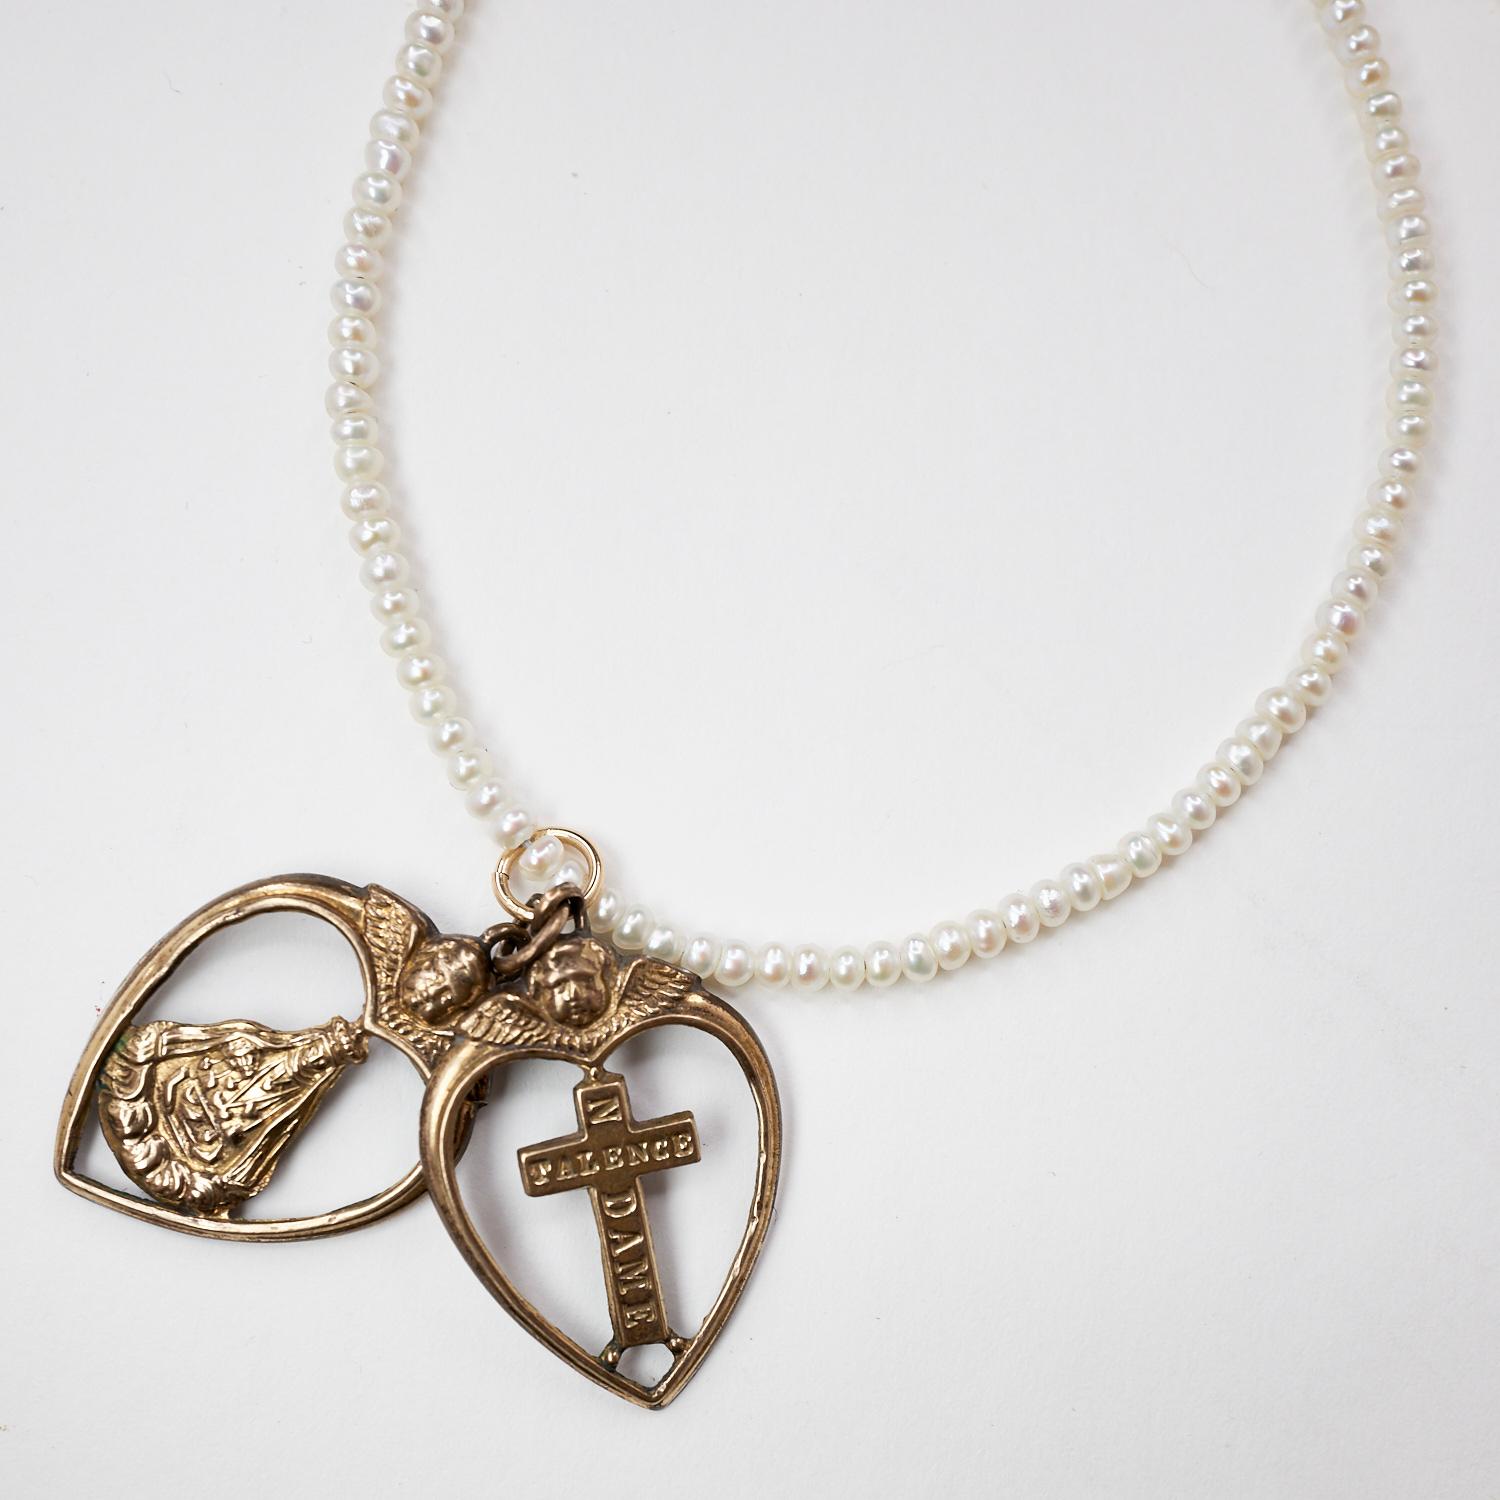 White Pearl Necklace Gold Filled Chain Choker Heart Angel Cross Pendant Tanzanite J Dauphin16